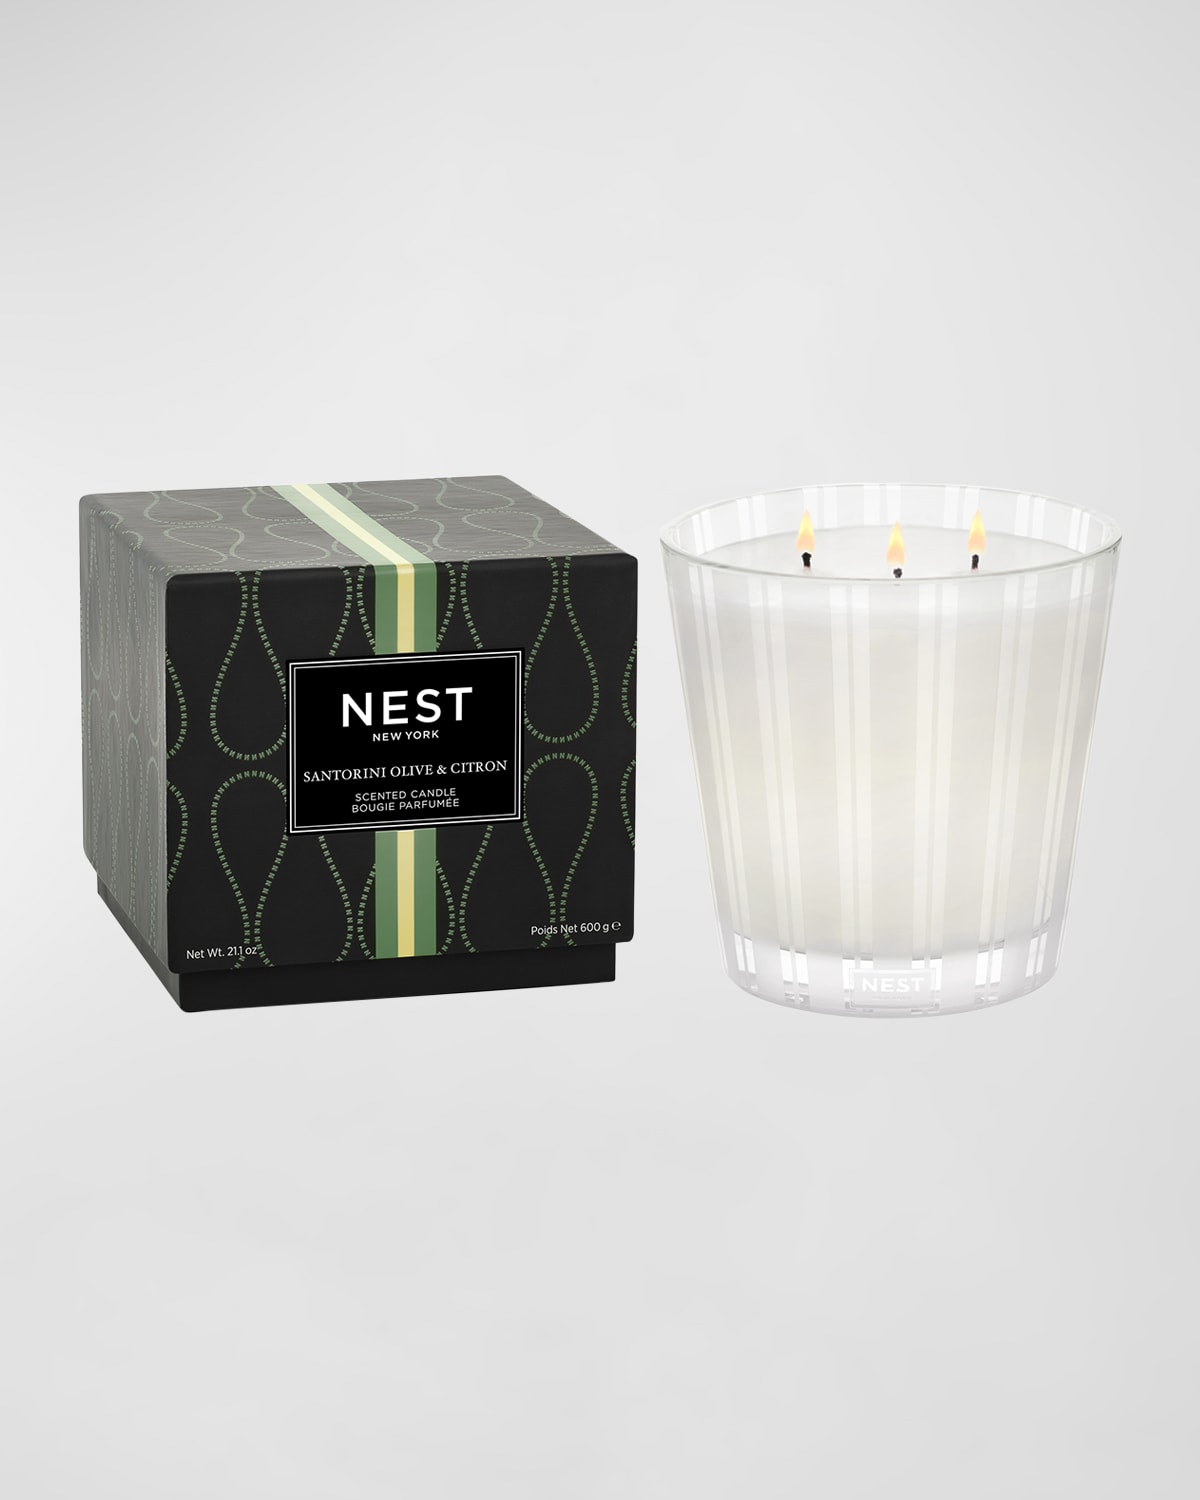 Nest New York Santorini Olive And Citron 3 Wick Candle, 21.2 Oz.